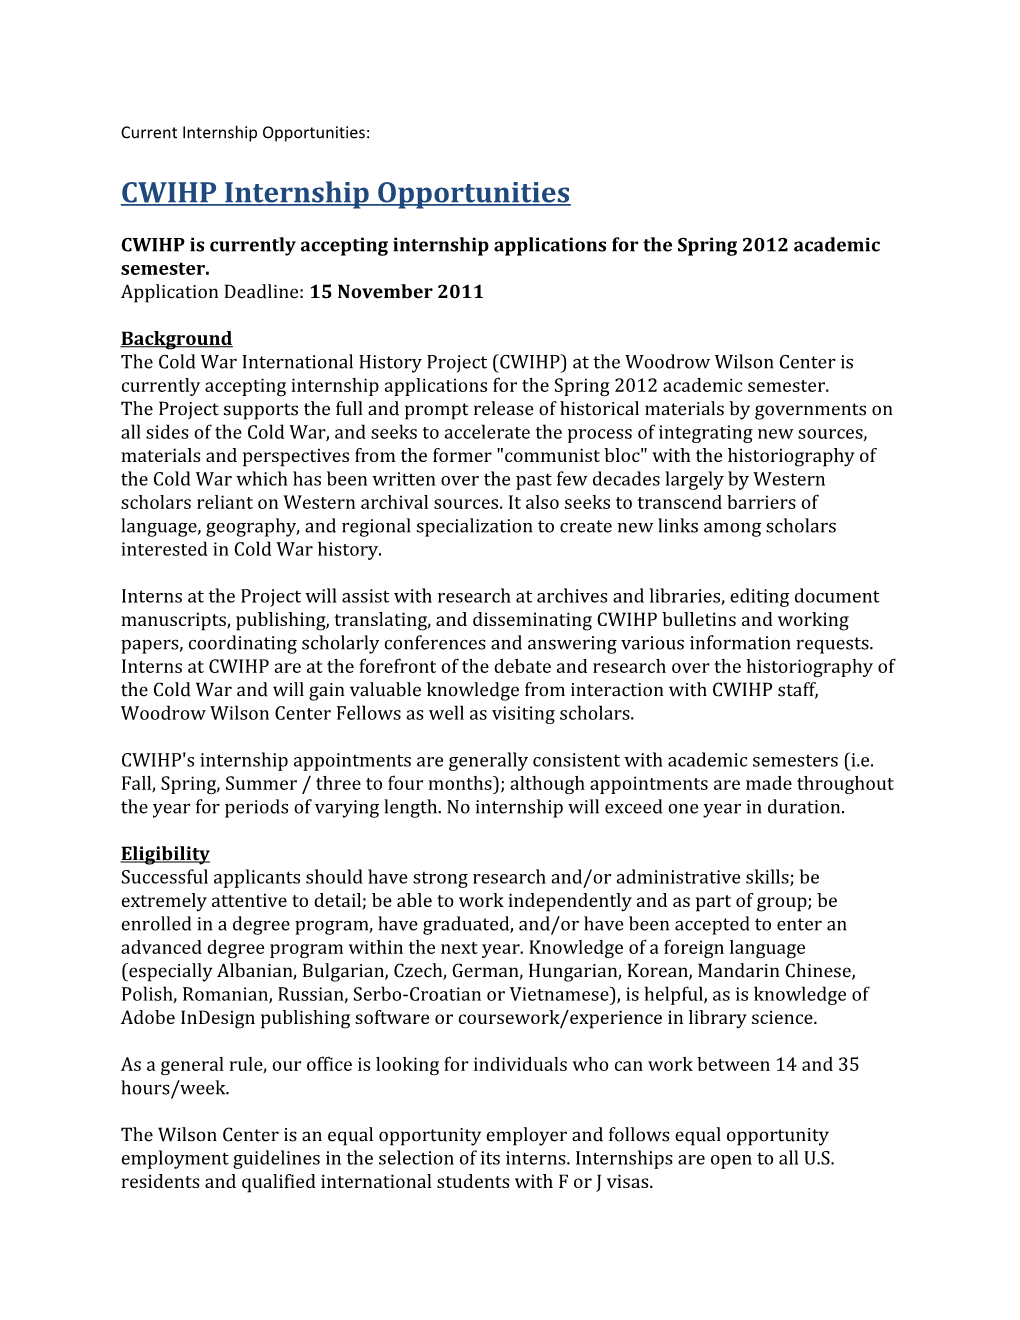 CWIHP Internship Opportunities